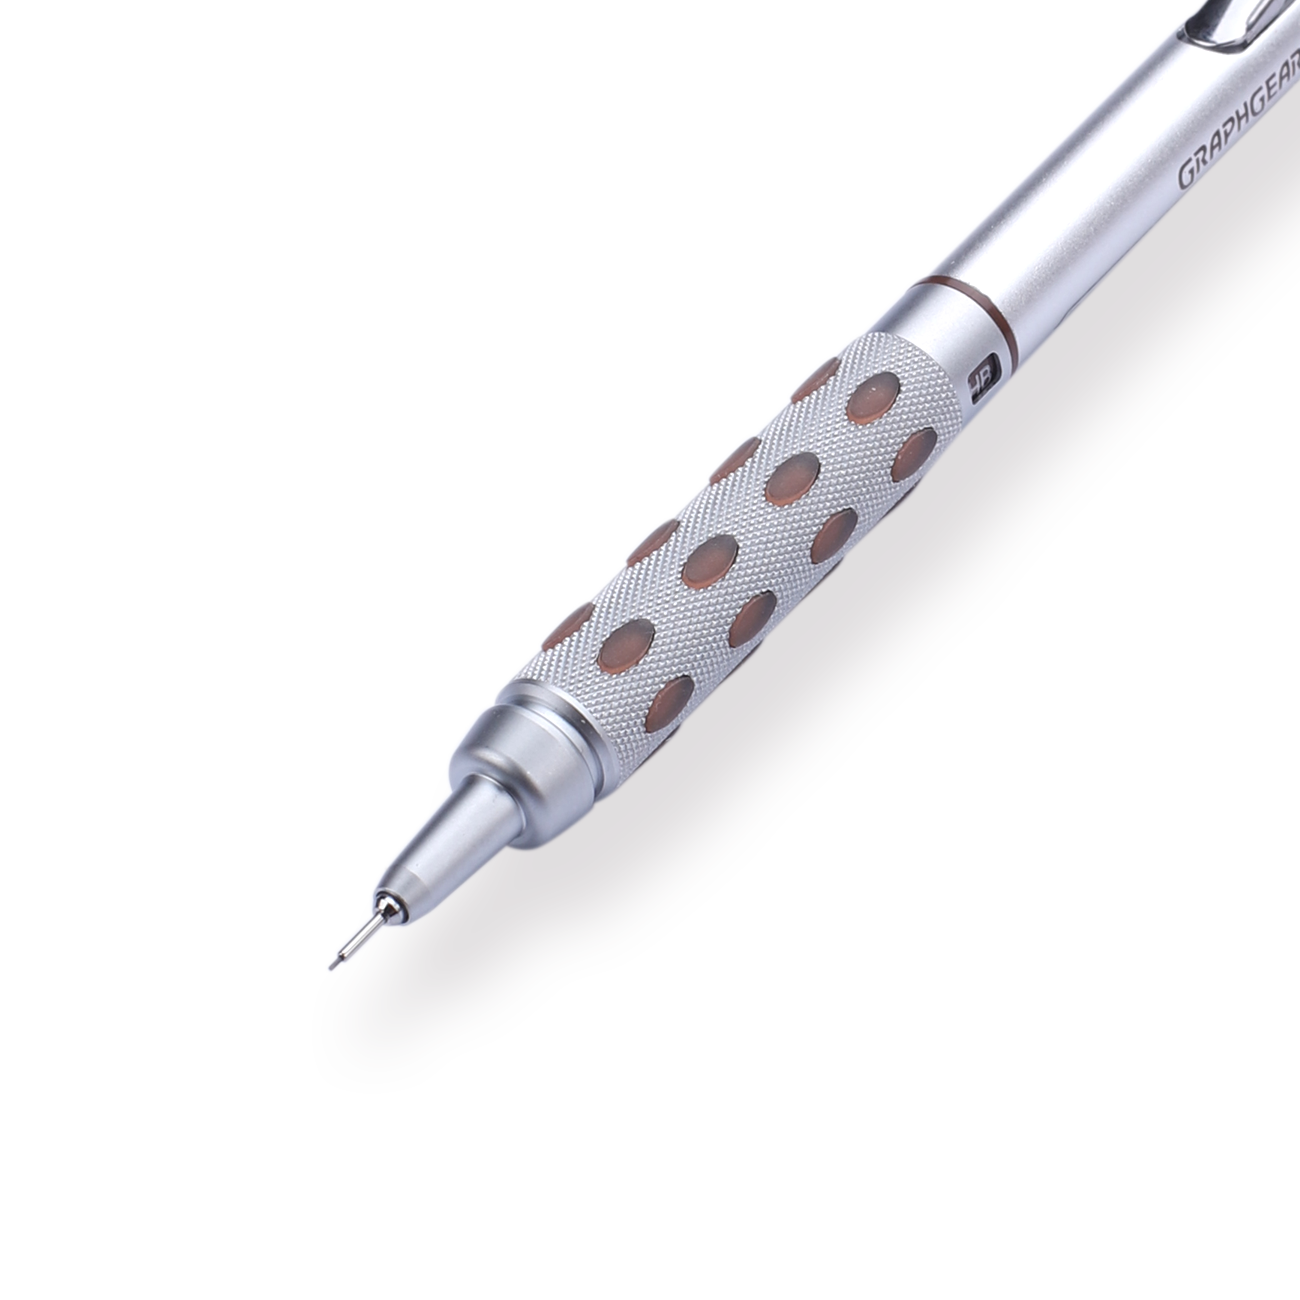 Pentel PG1013E GraphGear 1000 Automatic Drafting Pencil 0.3mm